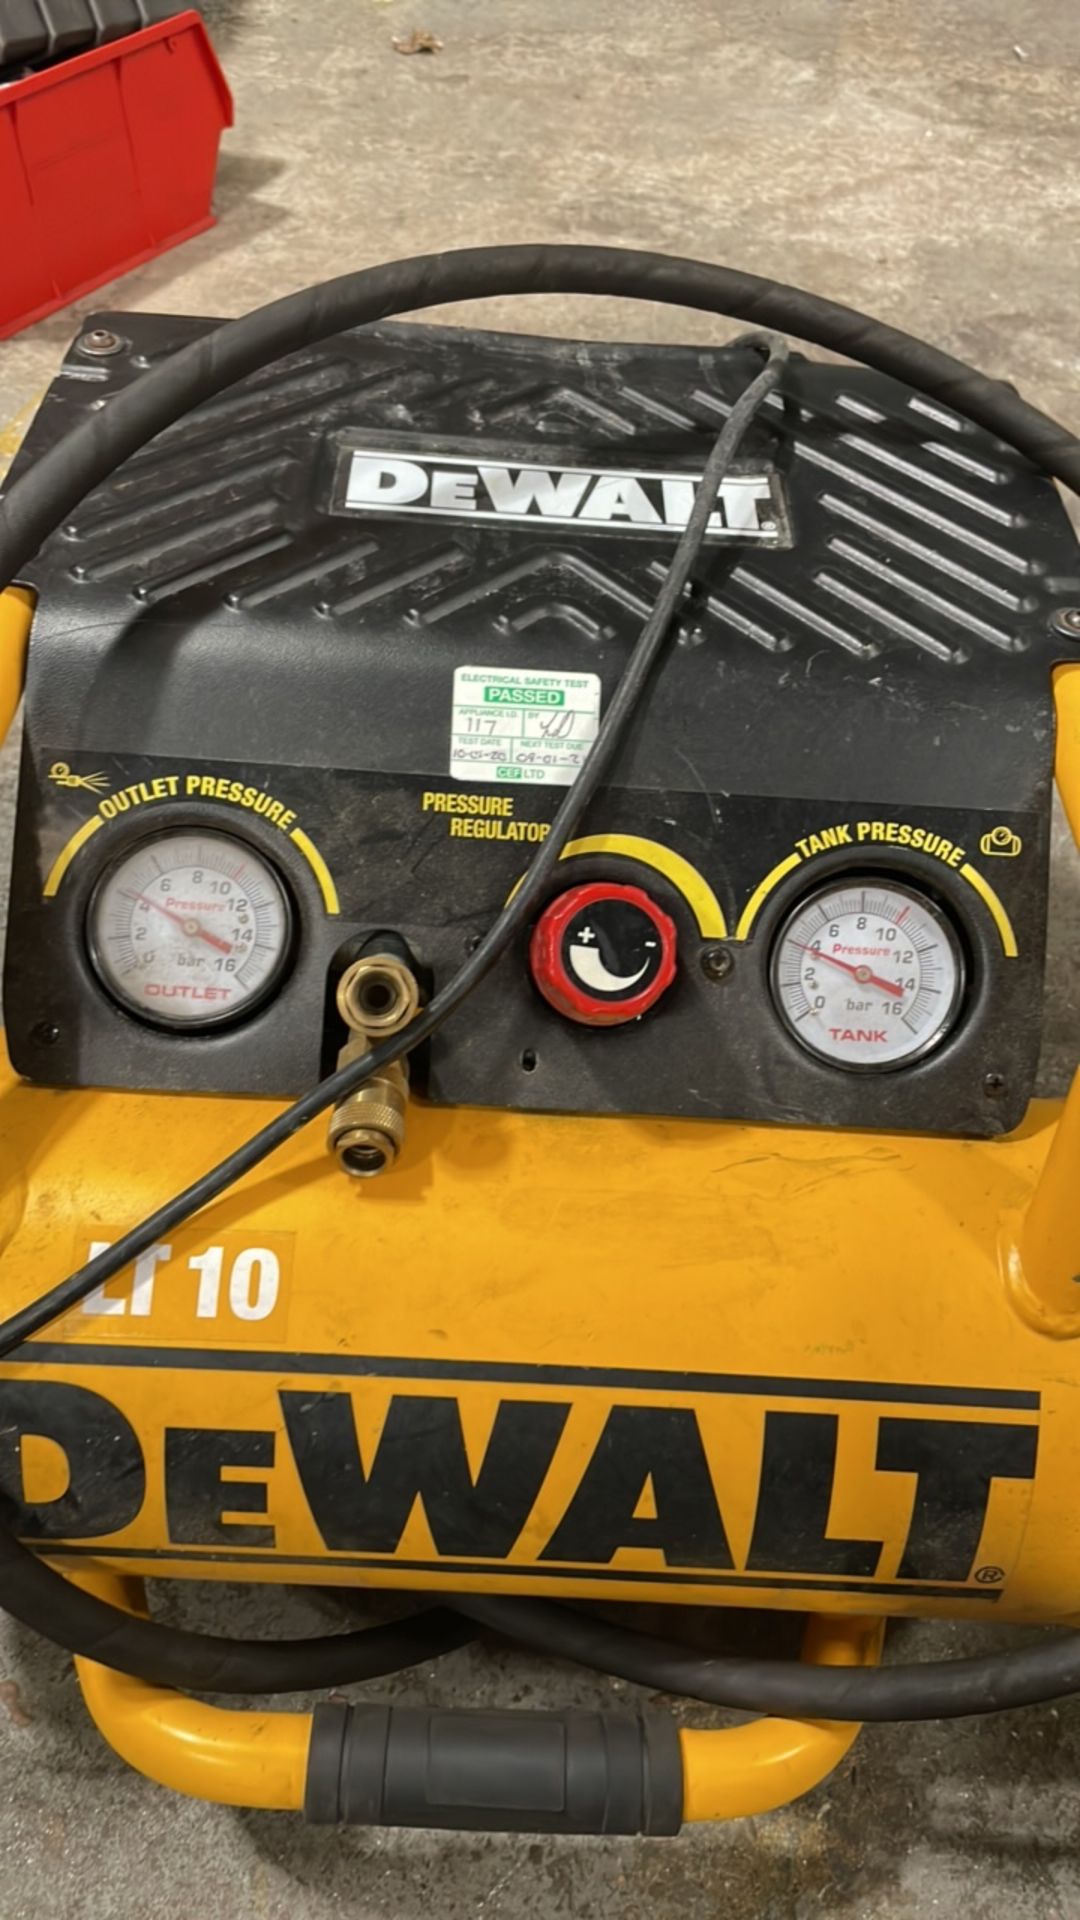 DeWalt LT10 Pressure Regulator - Image 2 of 2